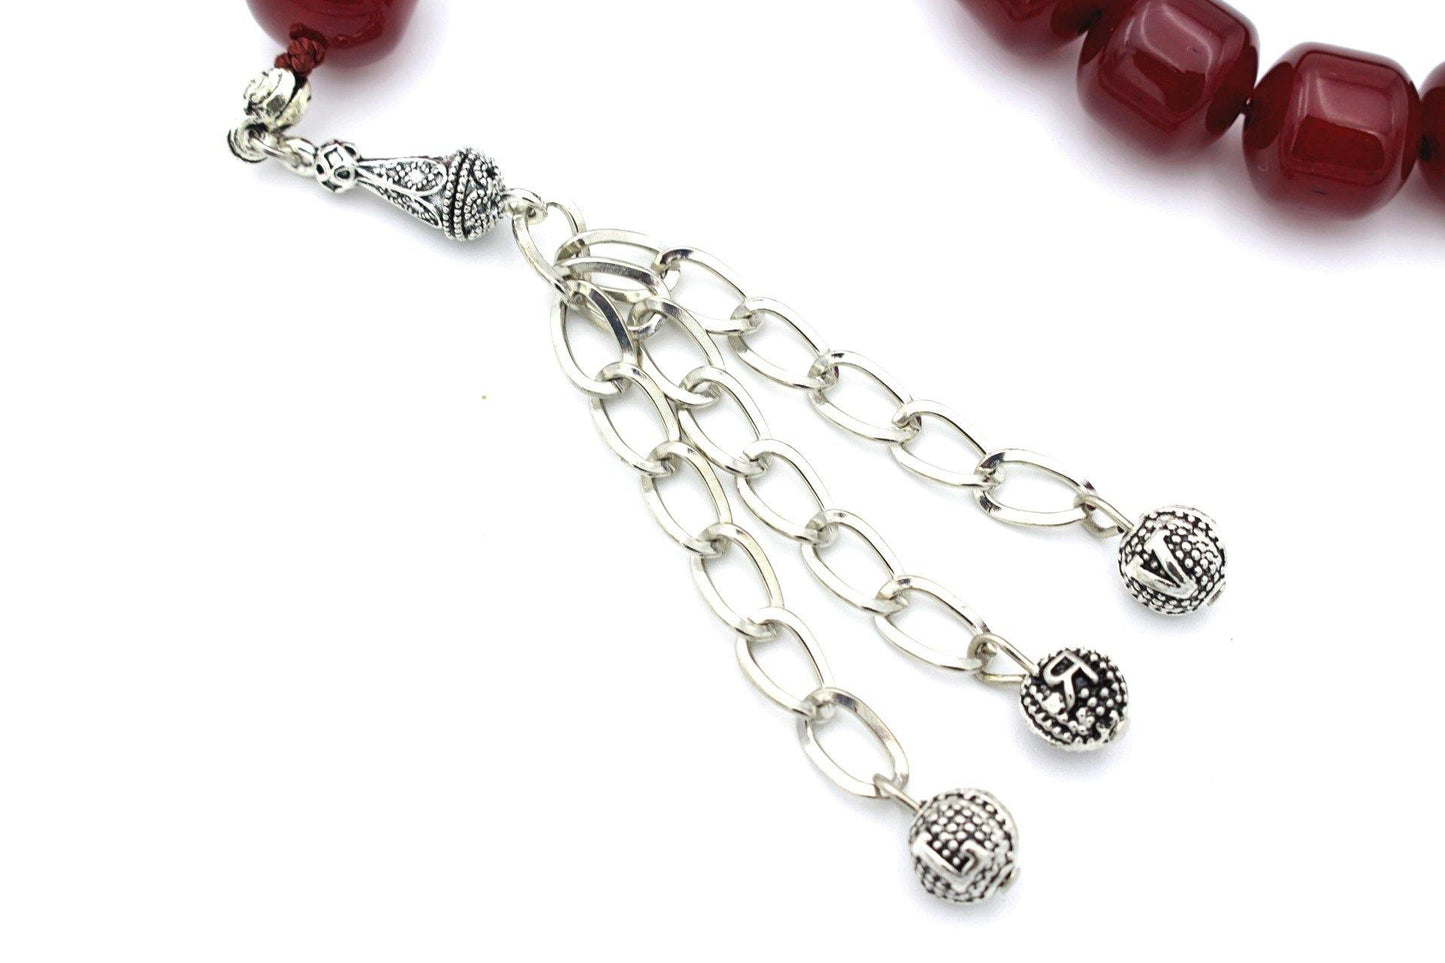 gemstones uk jewellery bakelite tasbih prayer beads